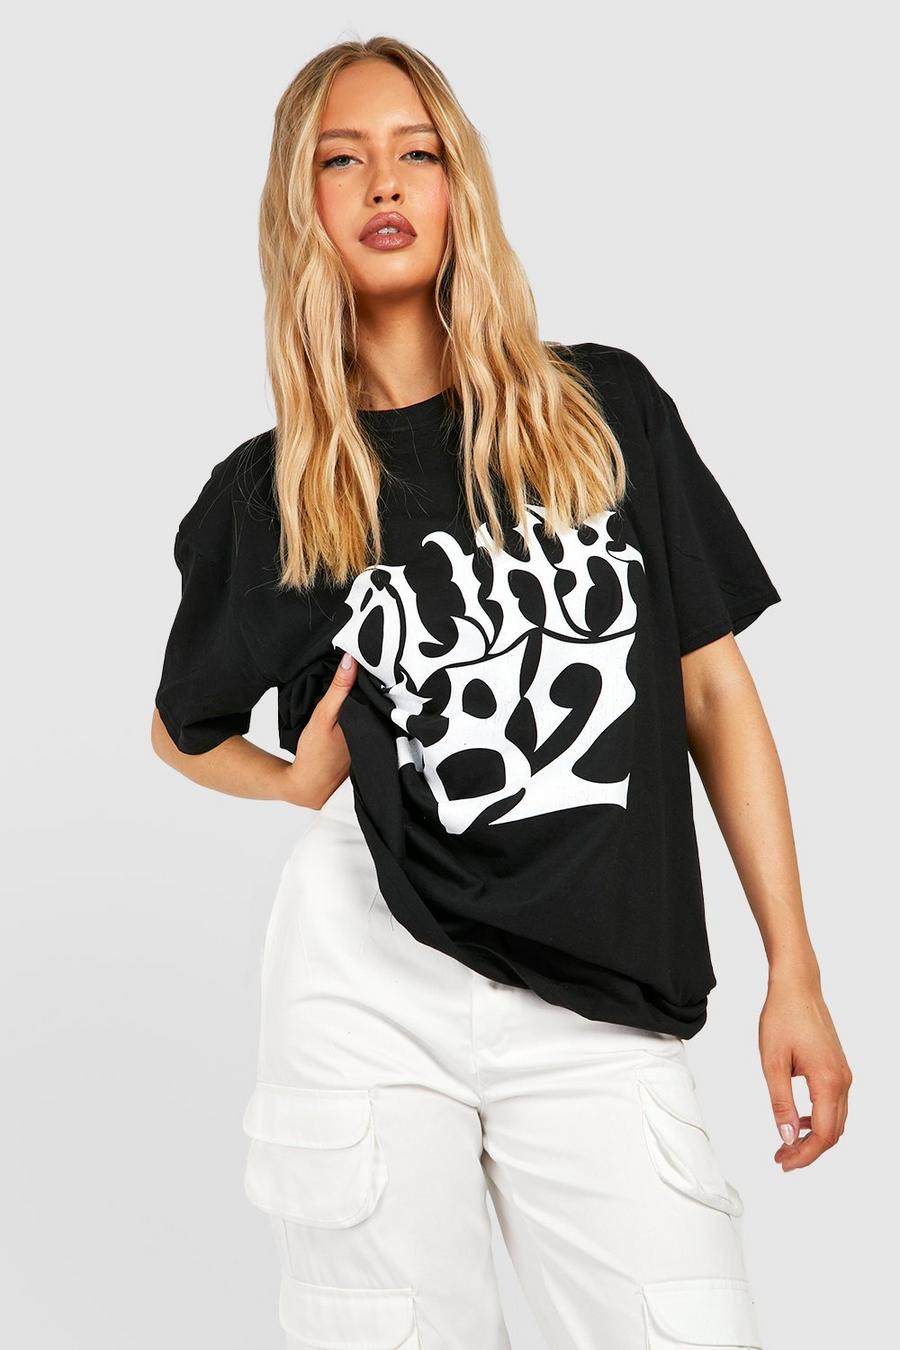 Tall Oversized Blink 182 License T-Shirt | boohoo